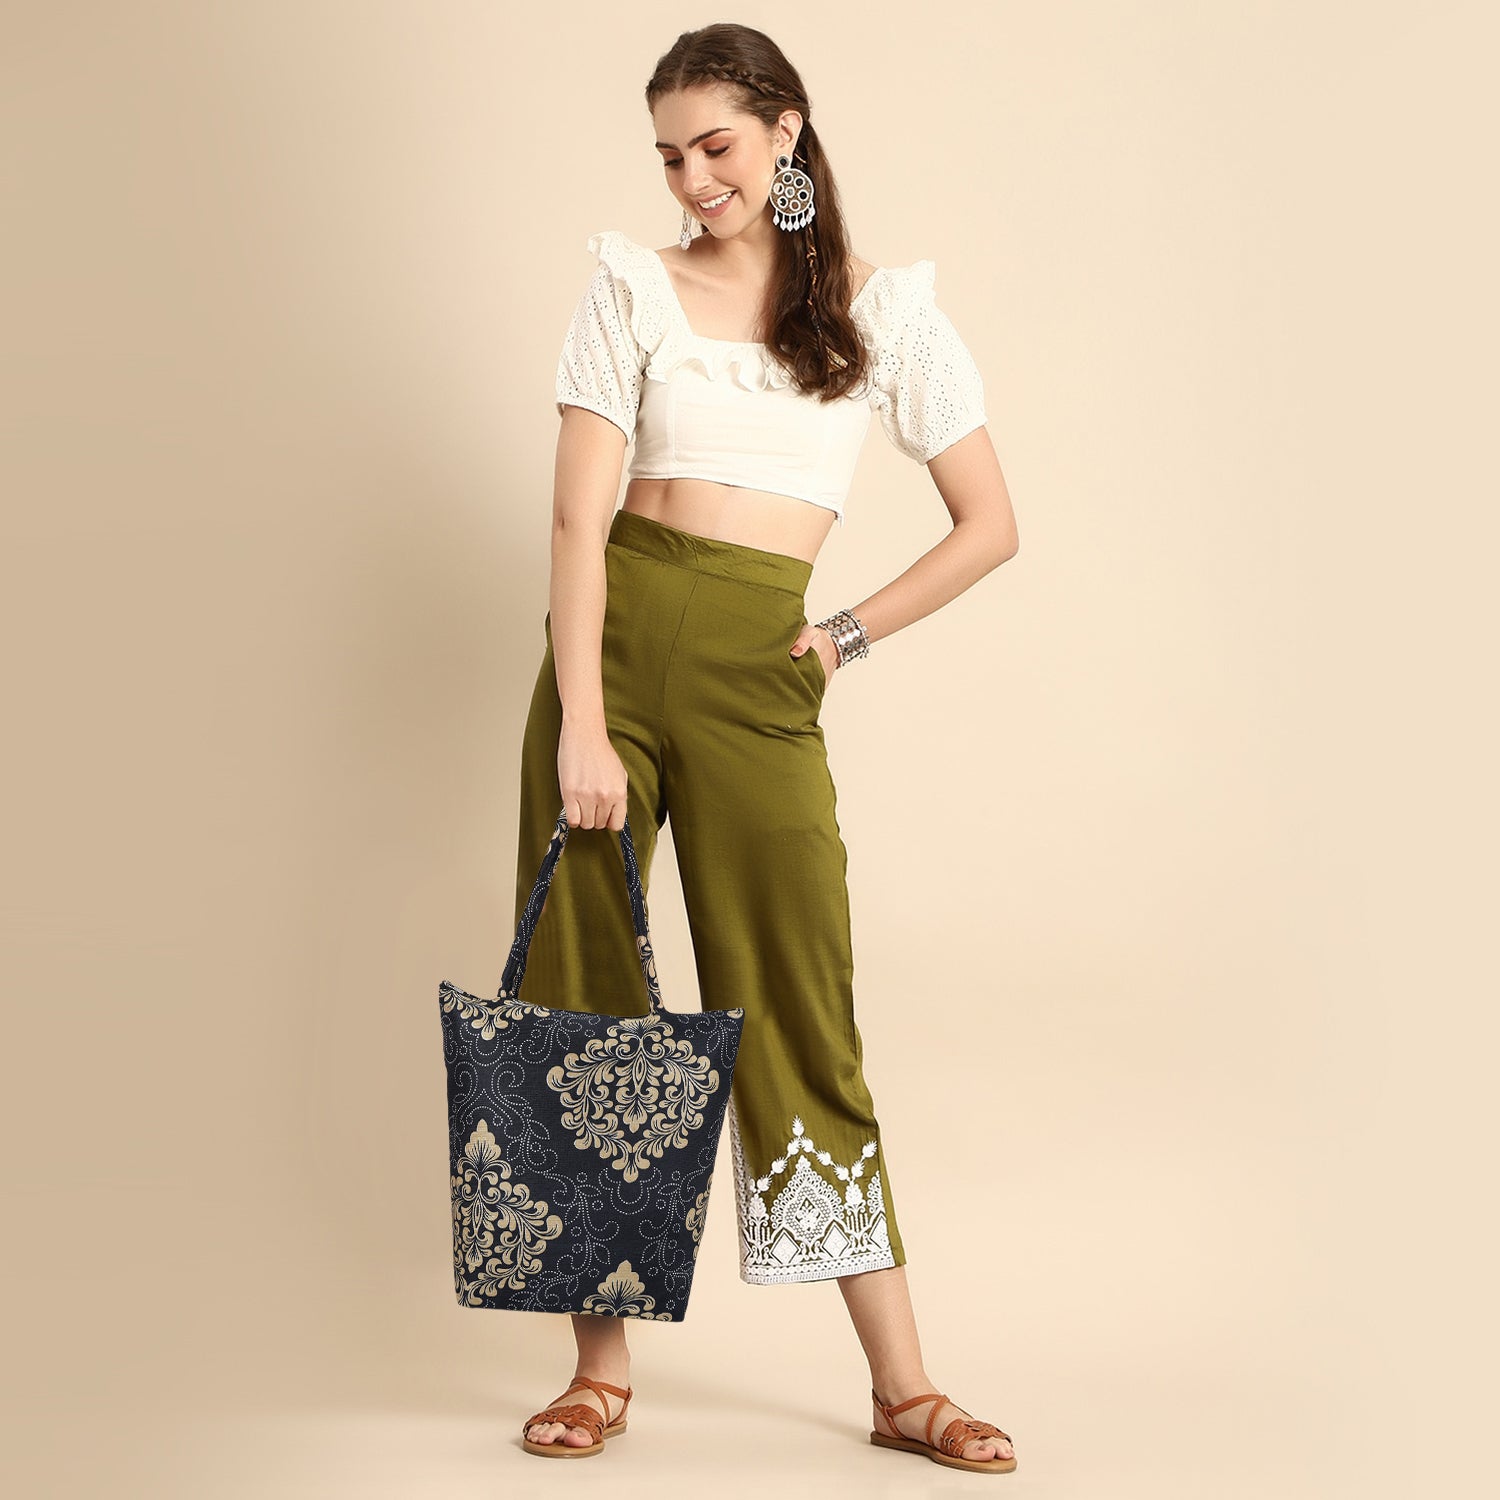 CIMONI Cotton Stylish Shoulder Top Handle Handheld Shoulder Unique Design Daytrip Shopping Women Handbag